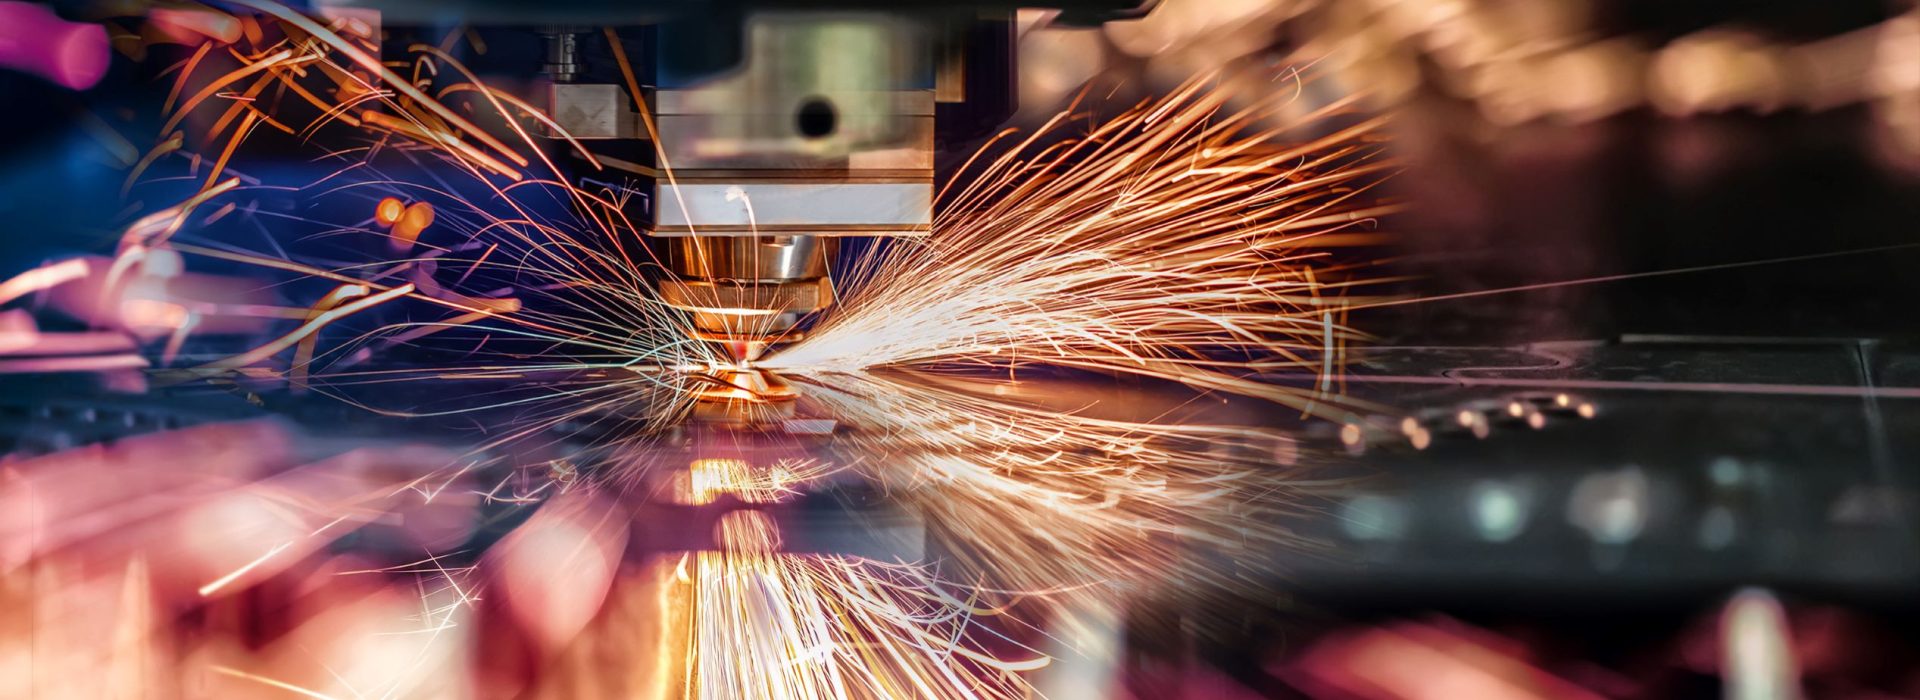 2cnc-laser-cutting-of-metal-modern-industrial-tech-2021-09-01-01-21-37-utc